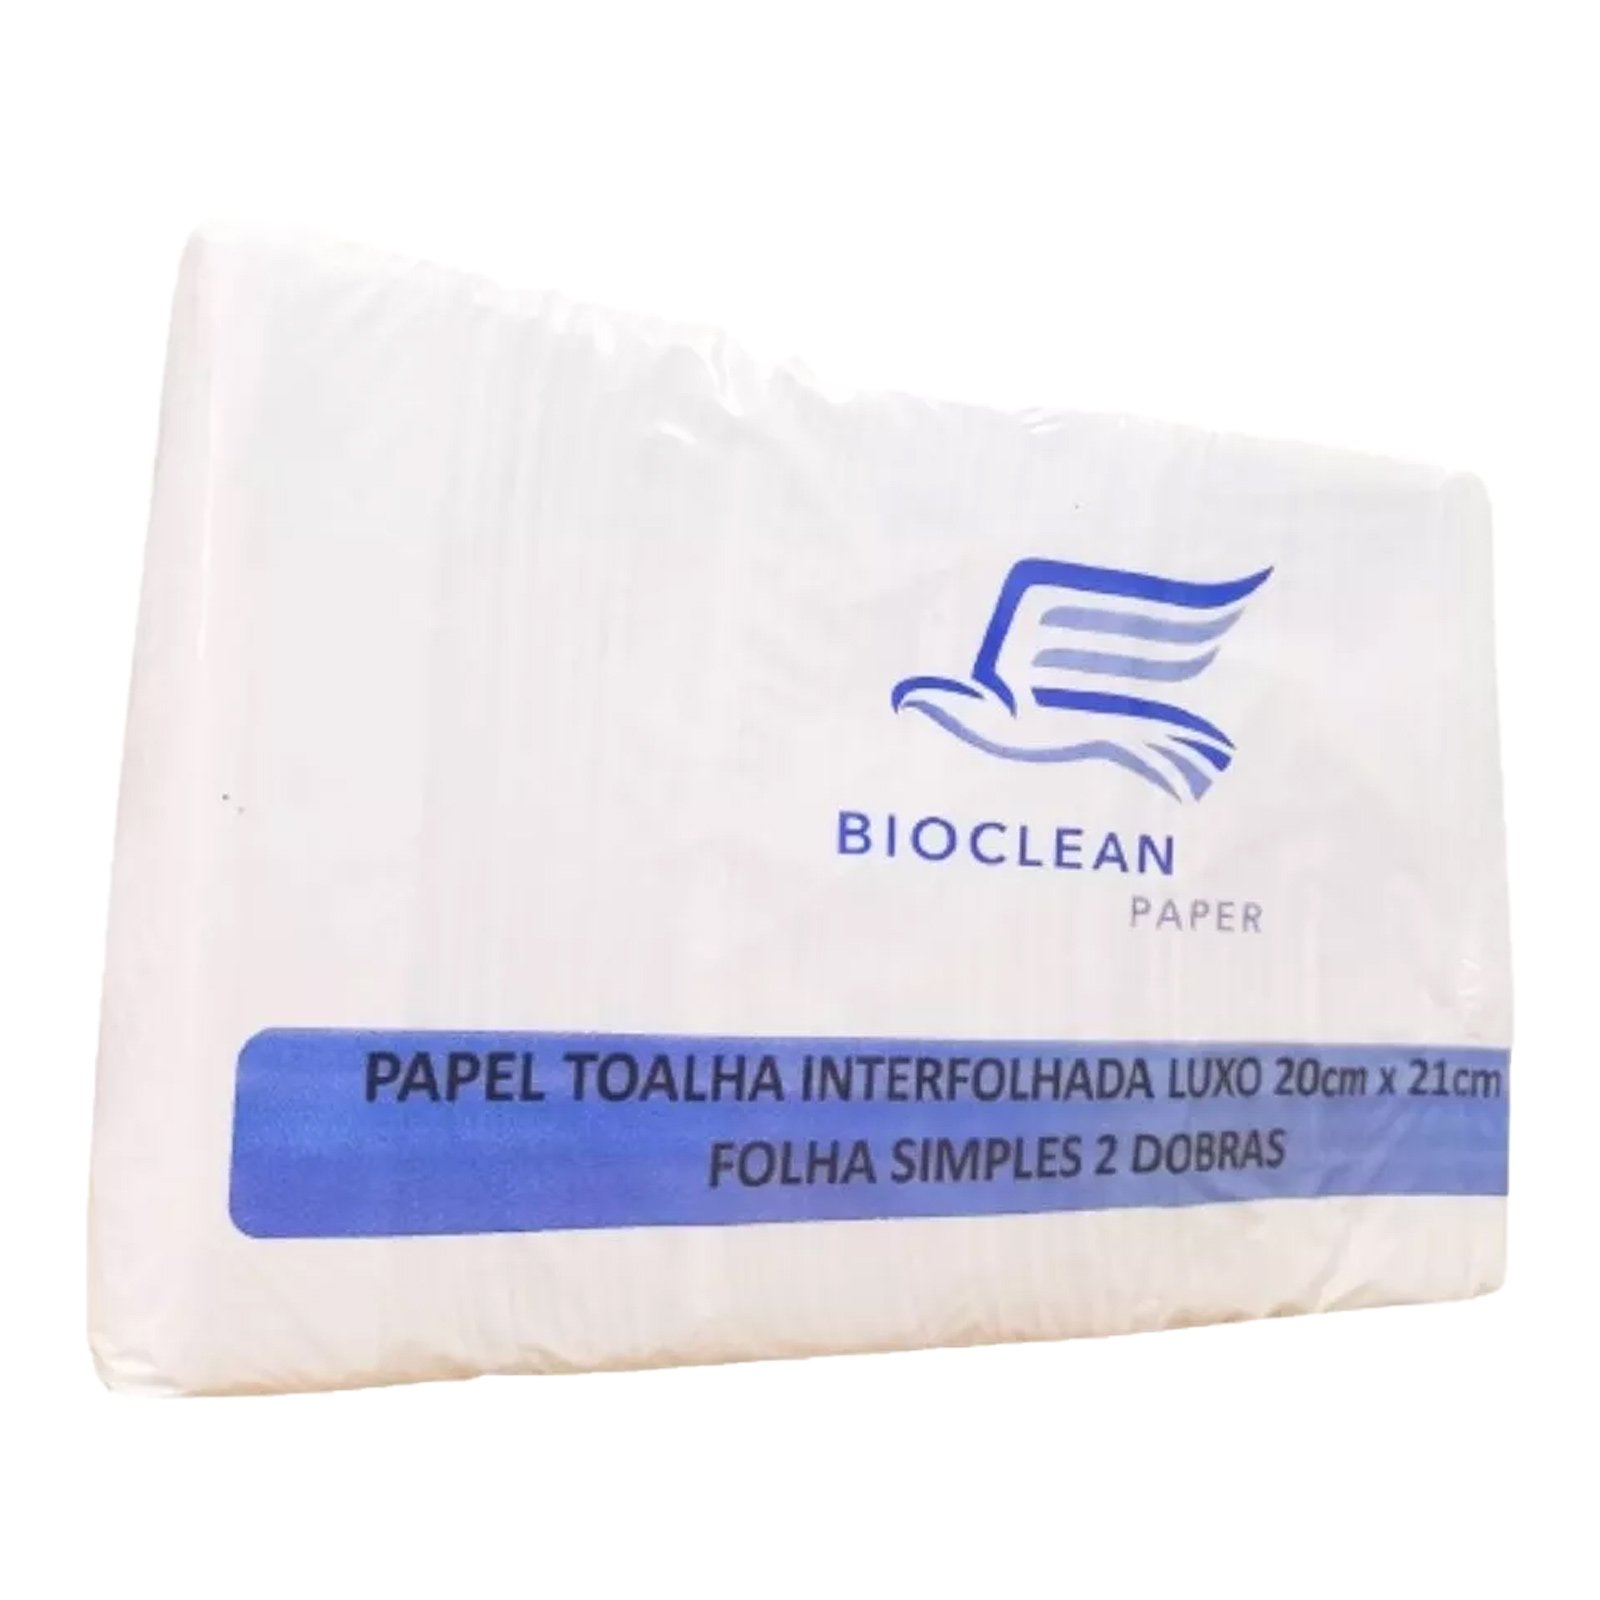 3 Pacotes Papel Toalha Interfolhado 20 X 21 Cm 1000 Folhas Bioclean Paper Luxo Branco - Kit 3000 Toa - 4